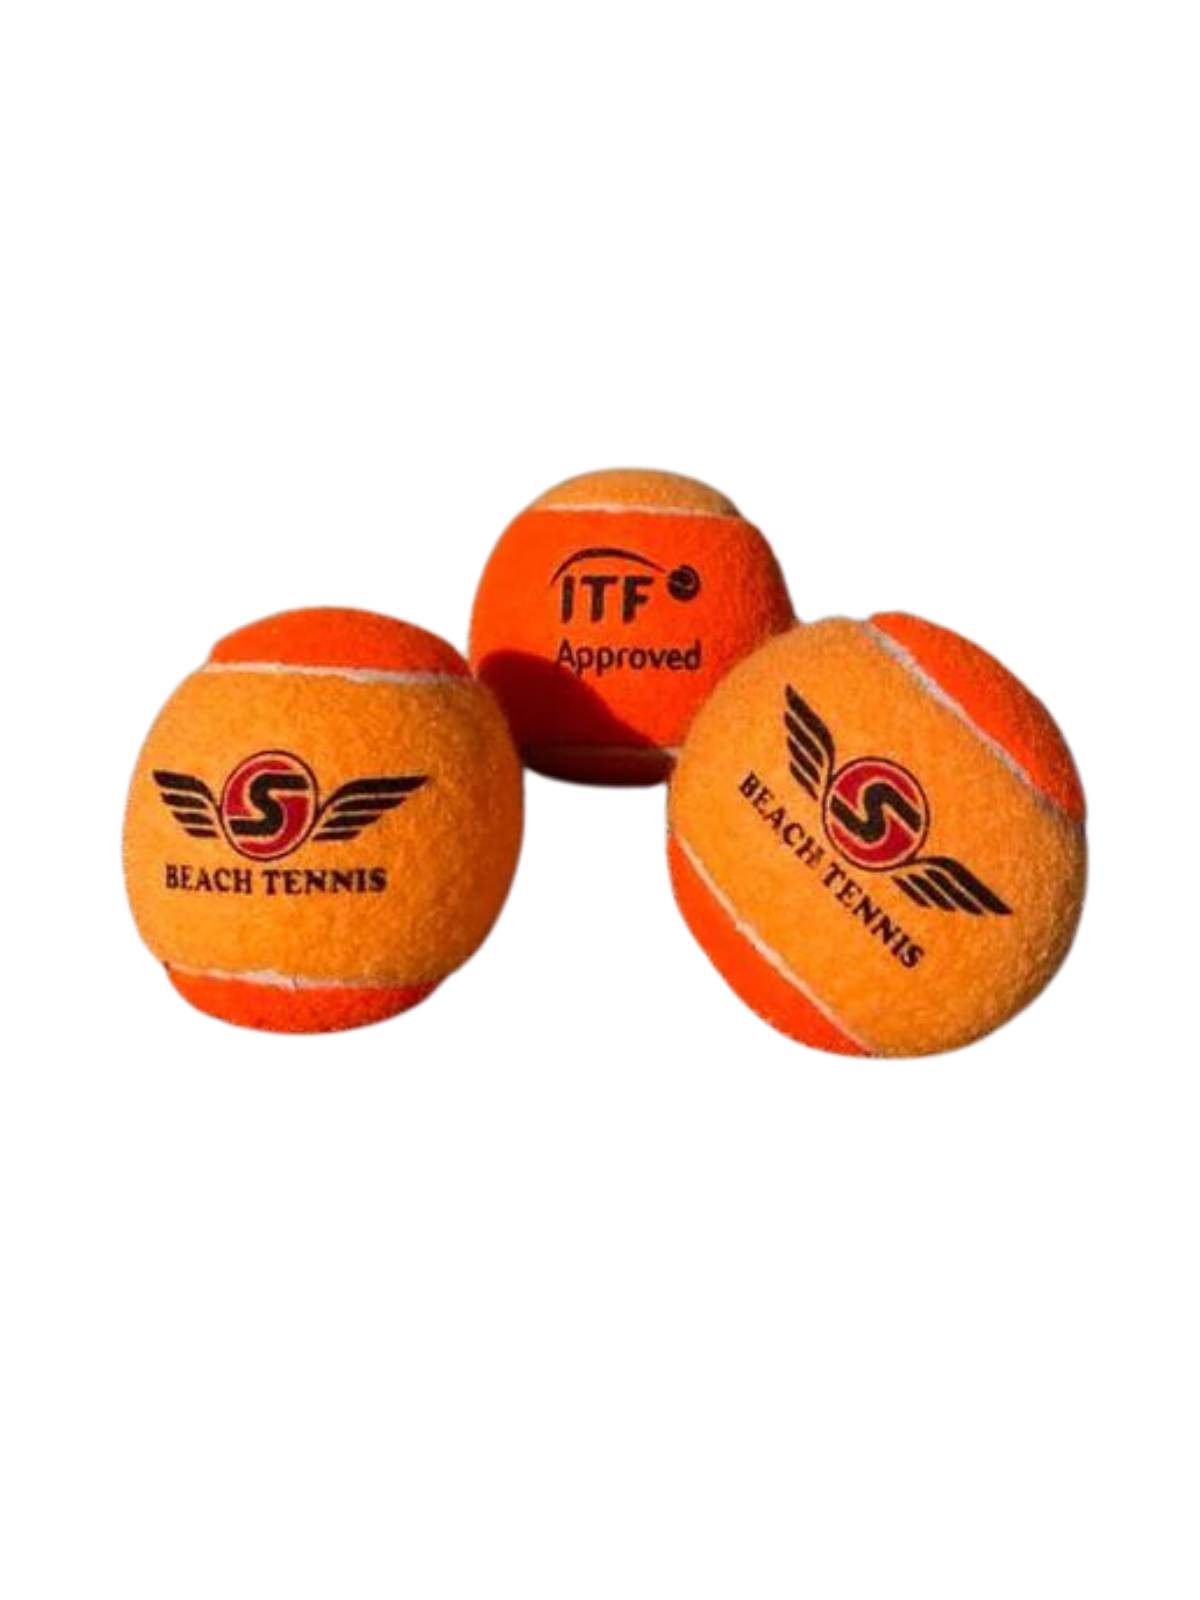 SEXY Brand Limited Edition Tropical S Beach Tennis Ball